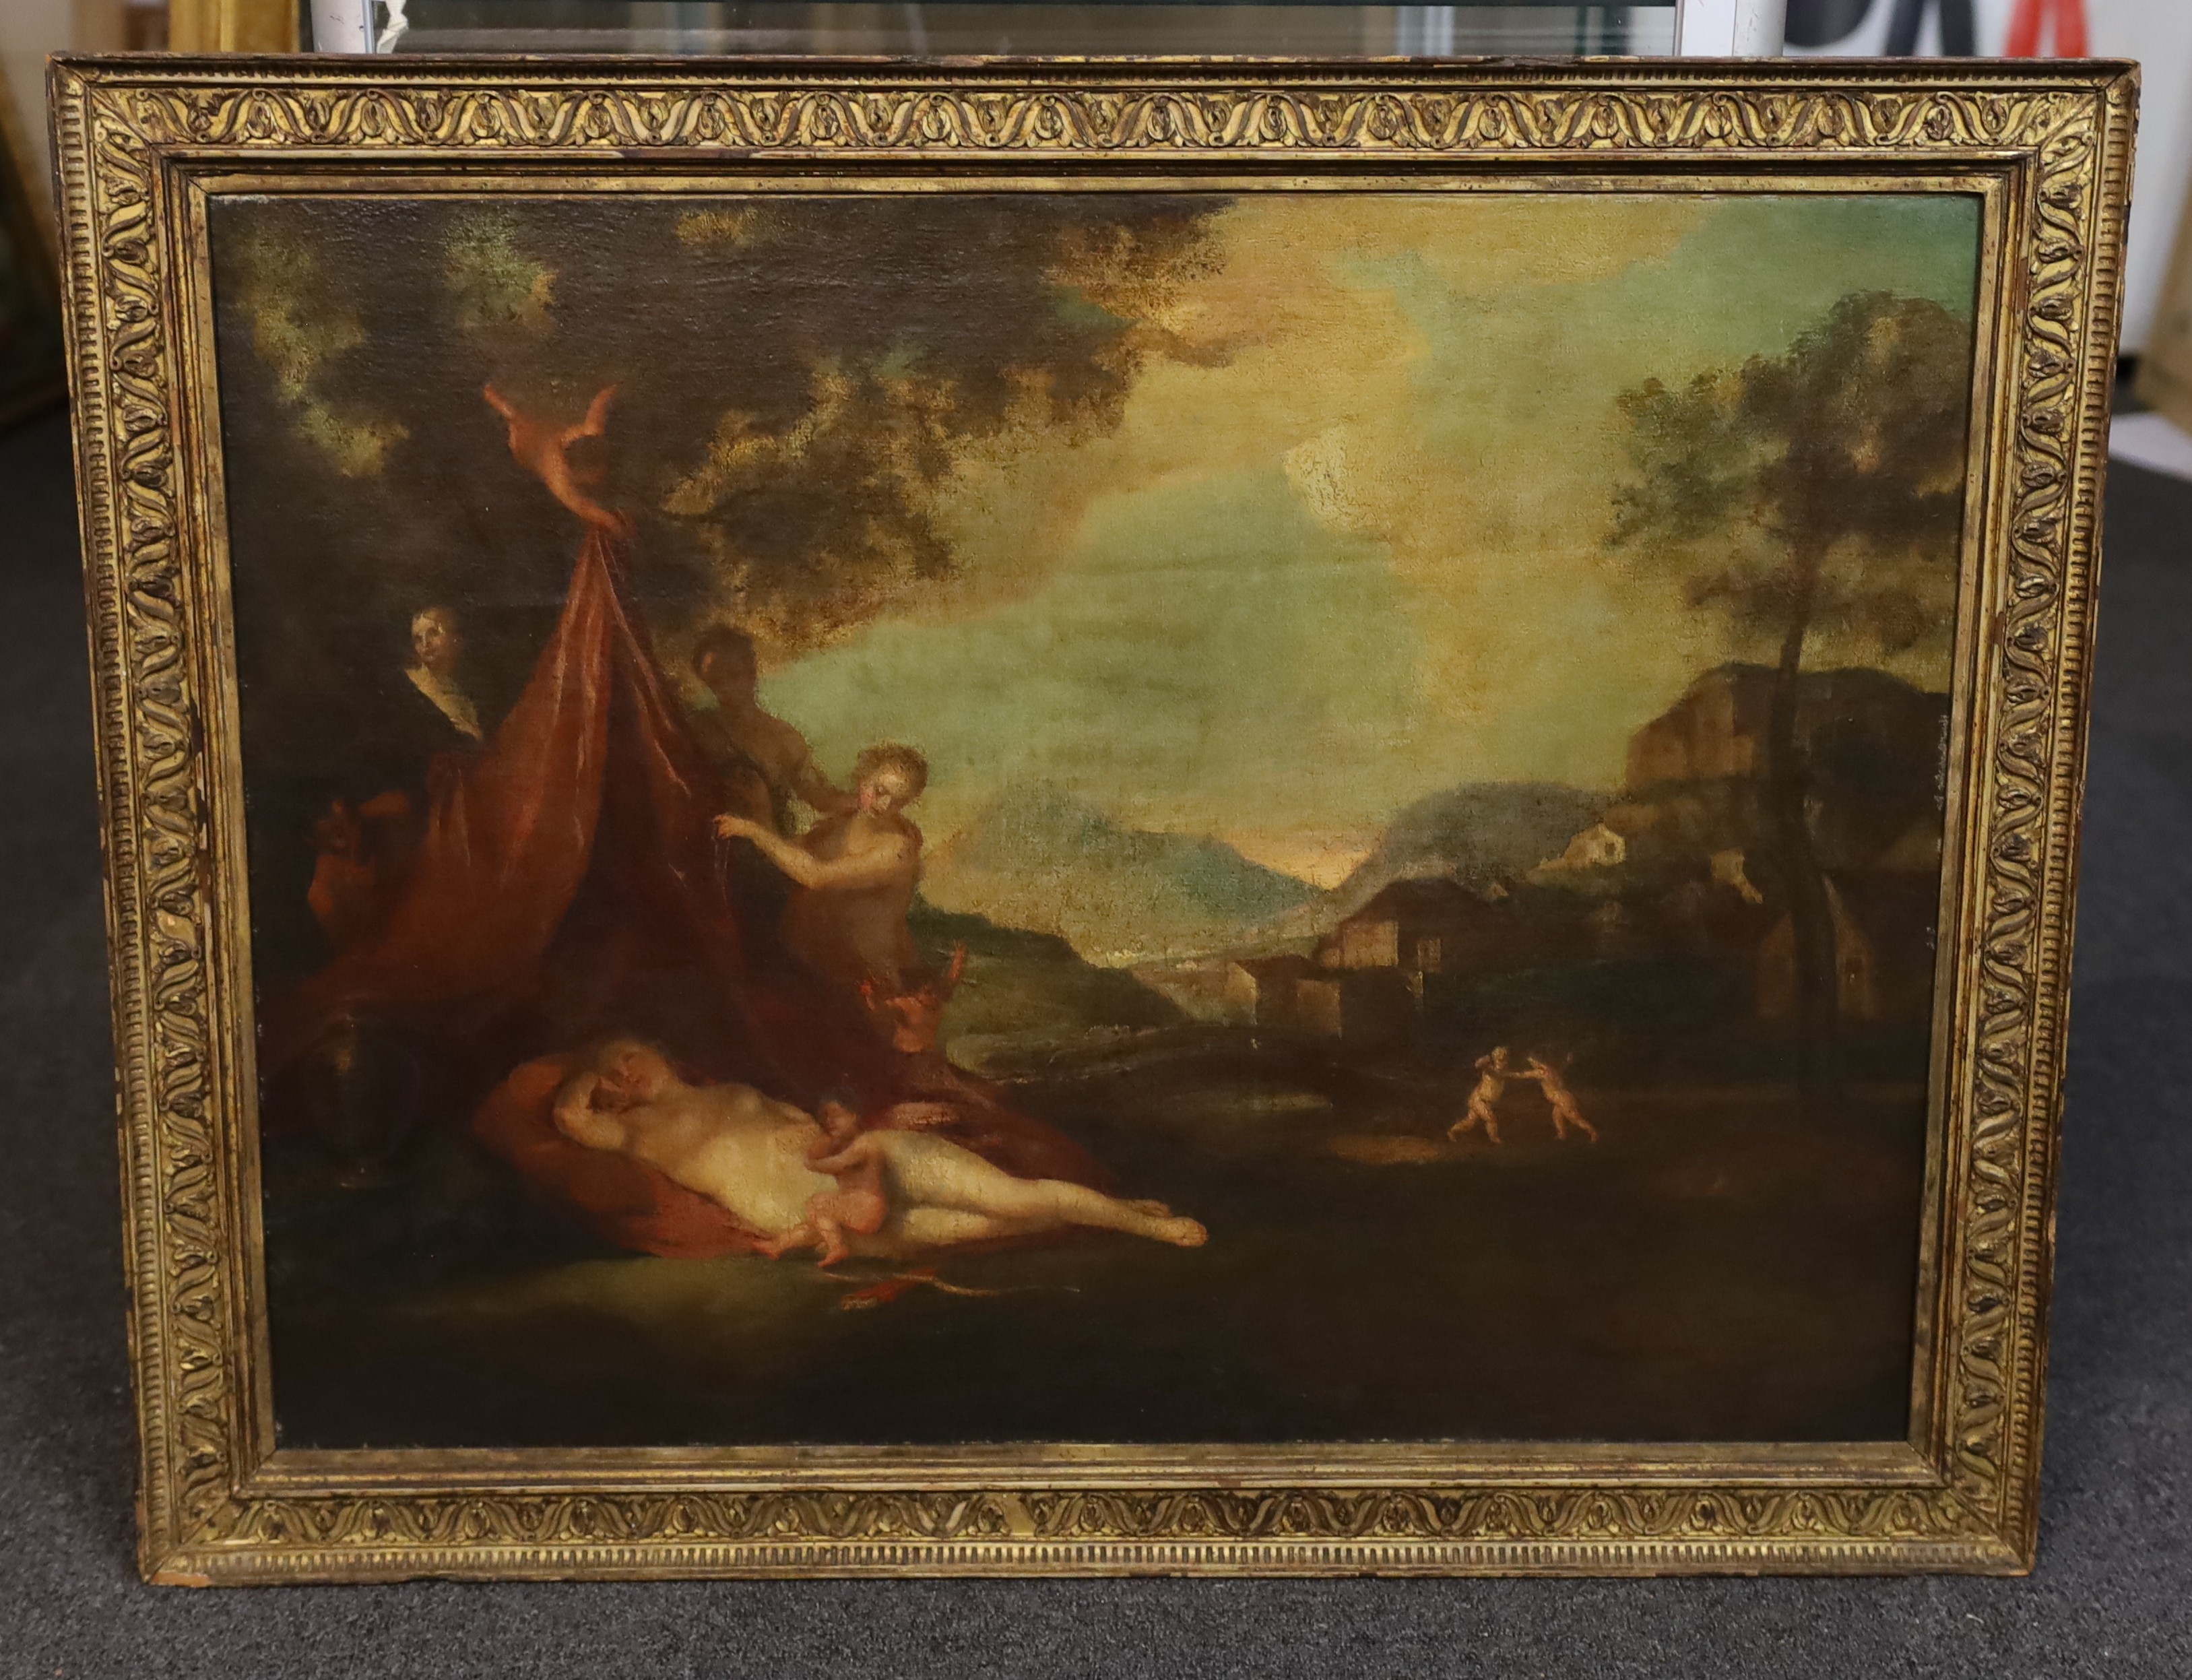 18th century Italian School, Venus sleeping in an Italianate landscape with attendants, oil on canvas, 54 x 71cm